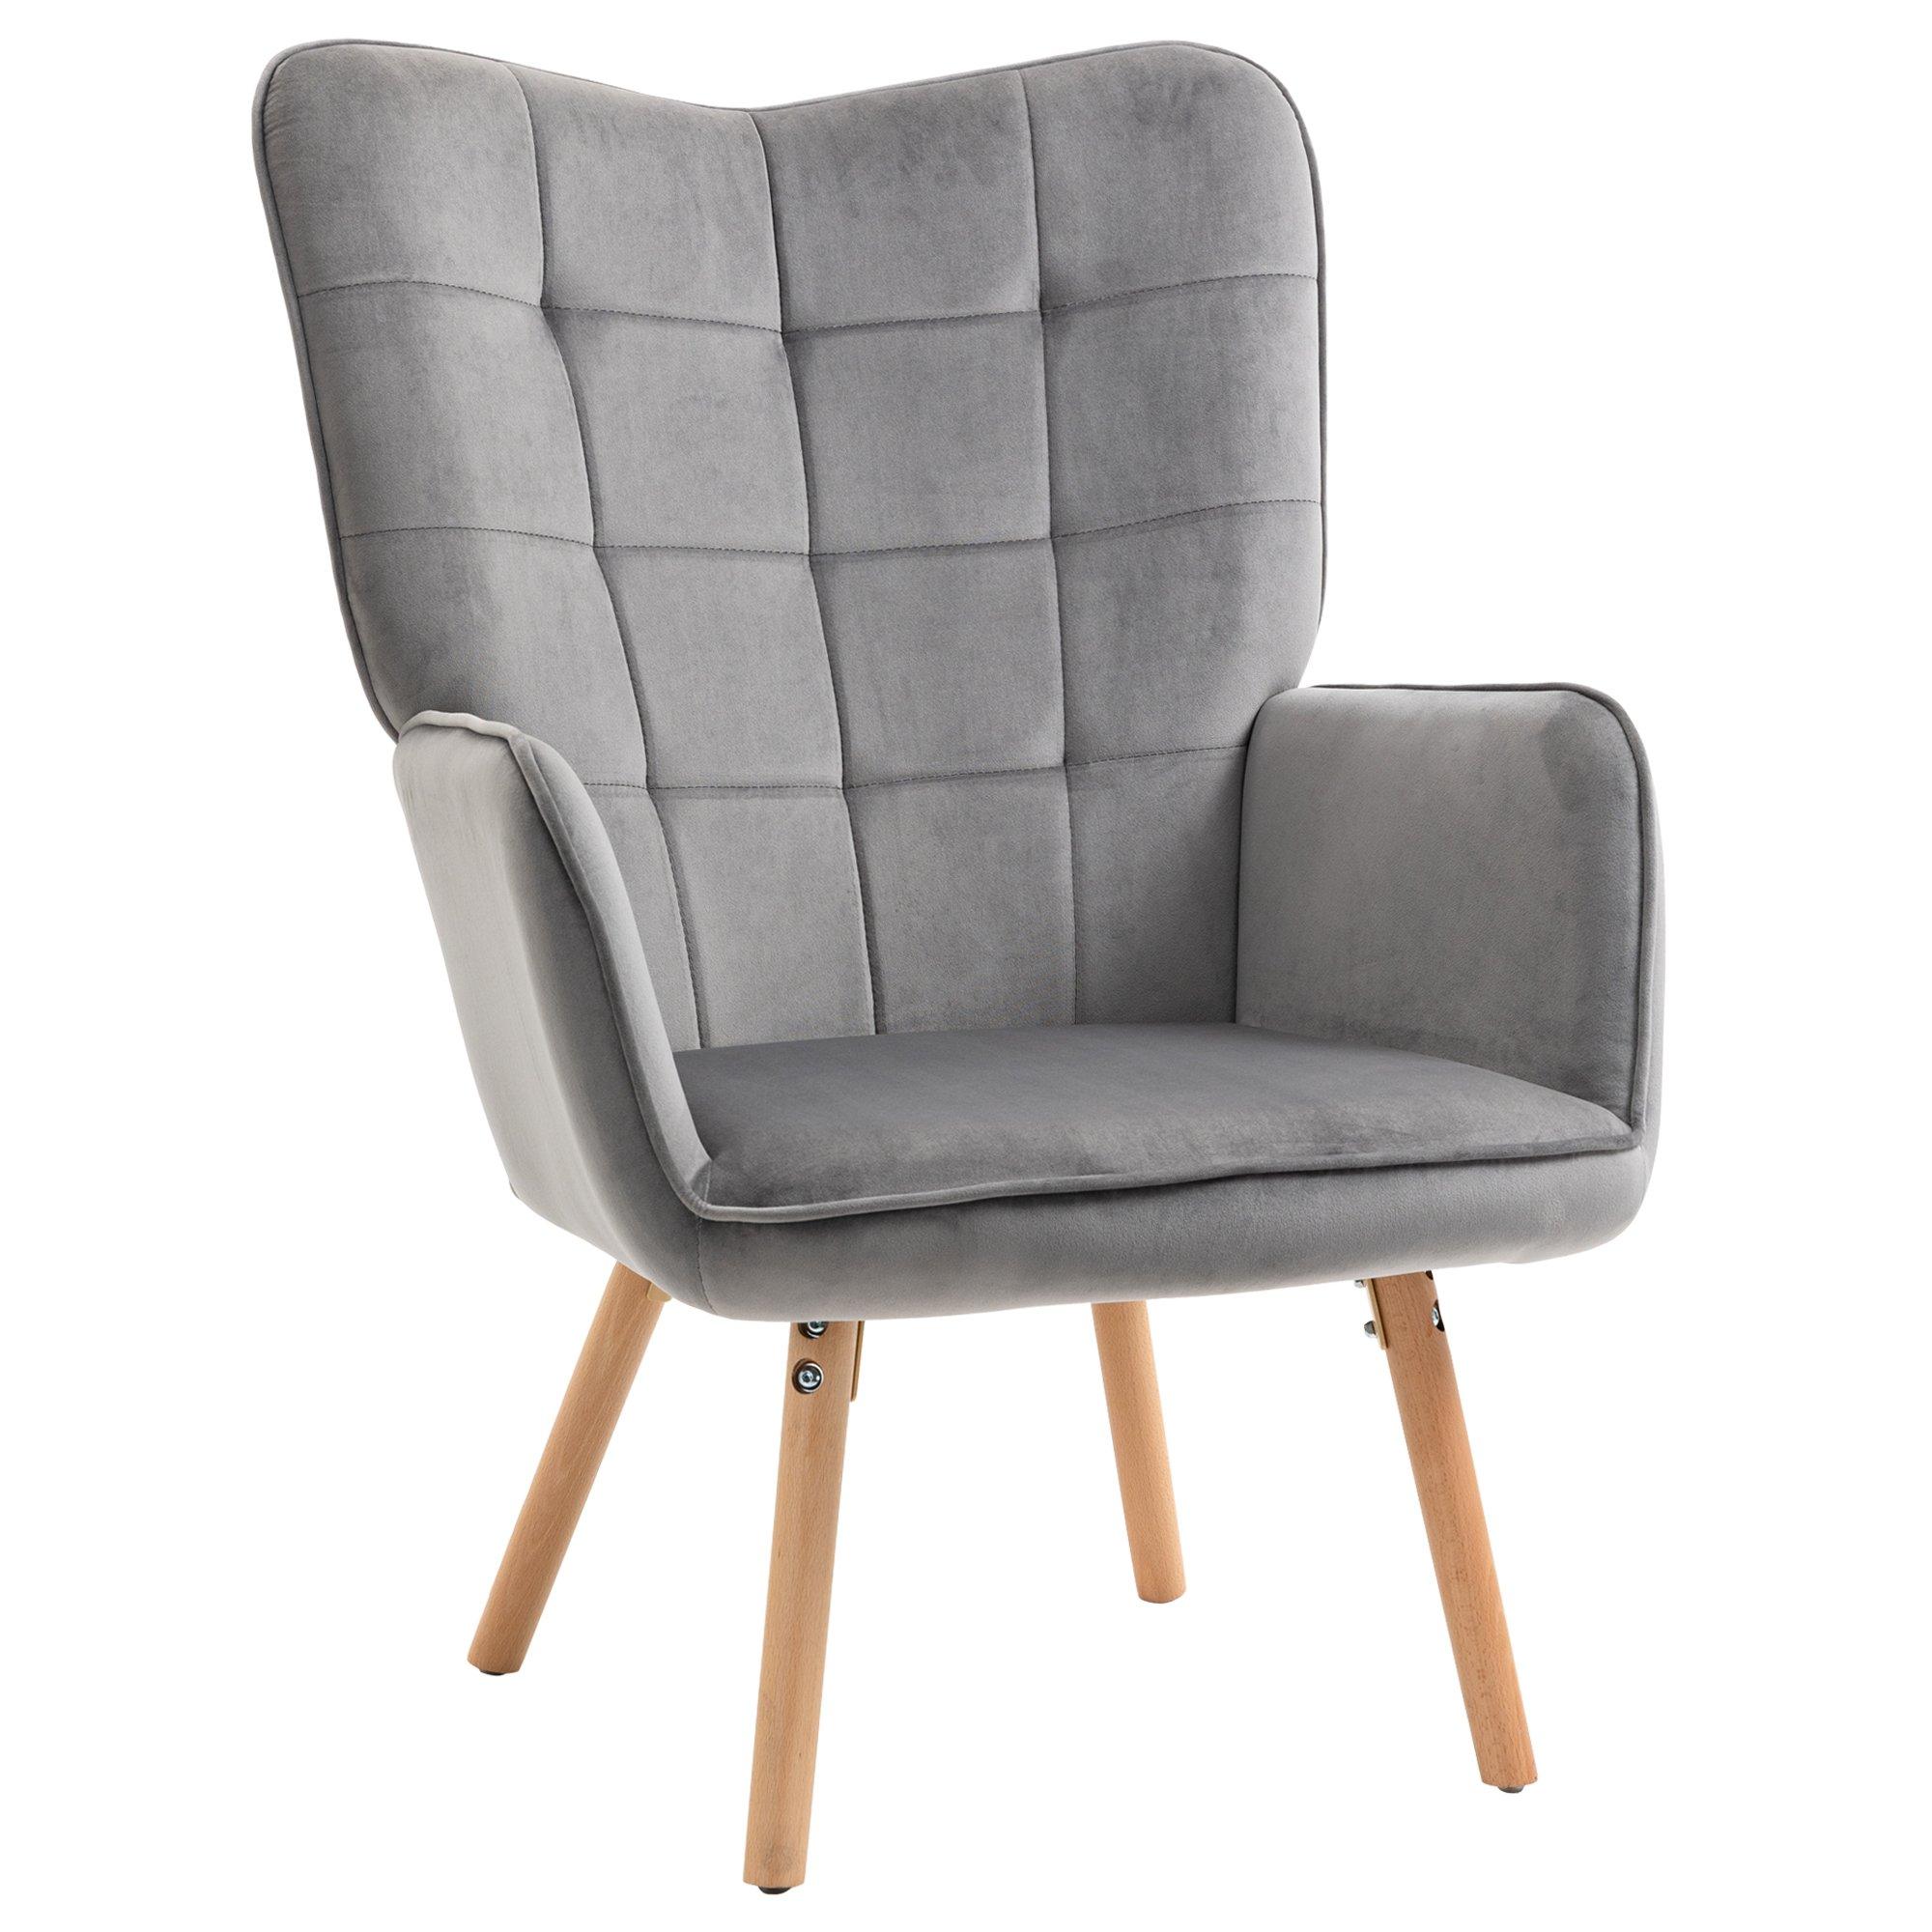 Accent Chair VelvetTufted Wingback Armchair Club Chair with Wood Legs